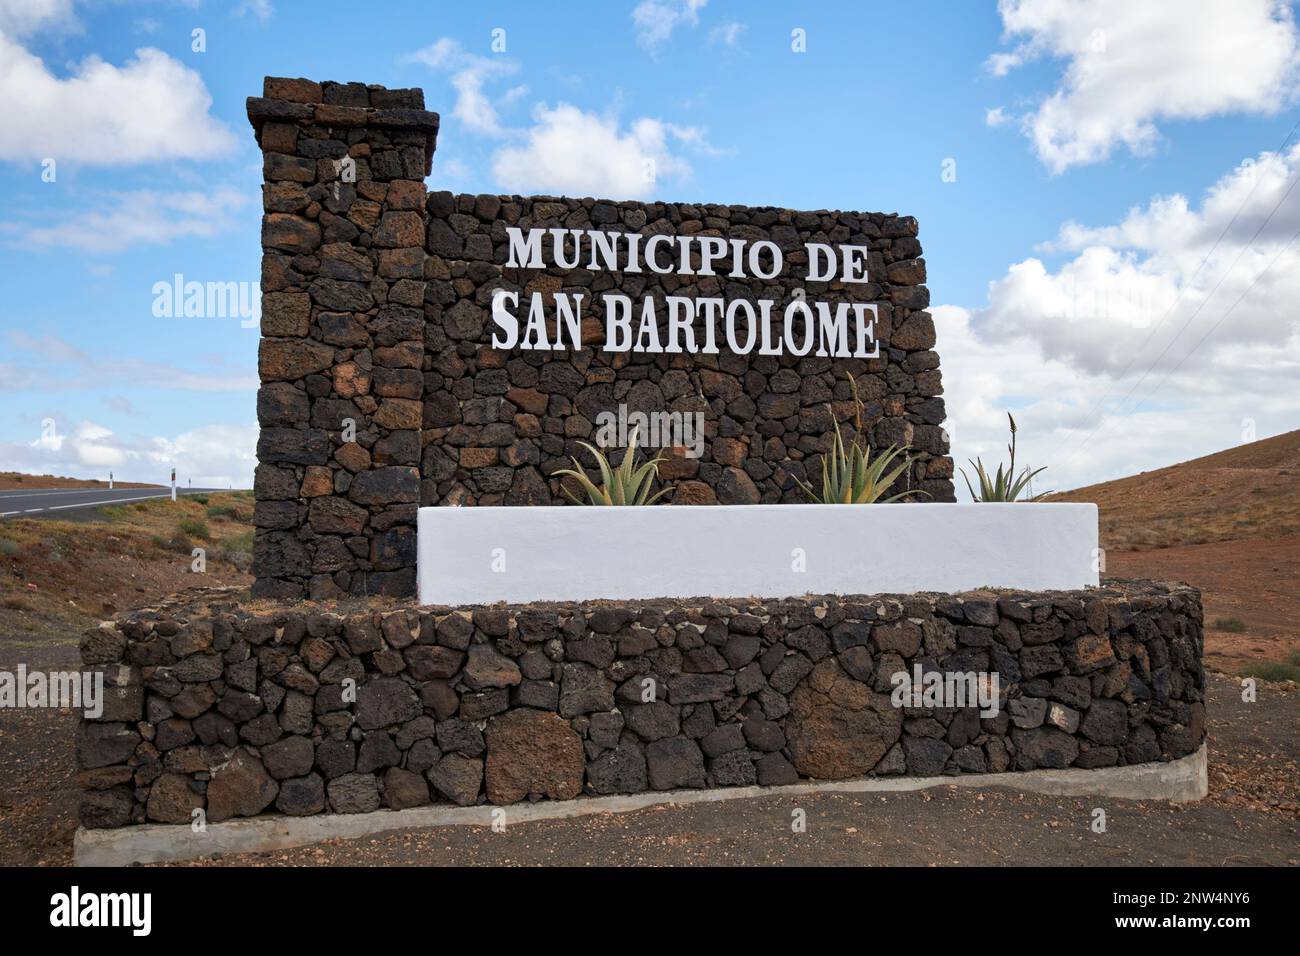 entrance to municipio de san bartolome municipality Lanzarote, Canary Islands, Spain Stock Photo